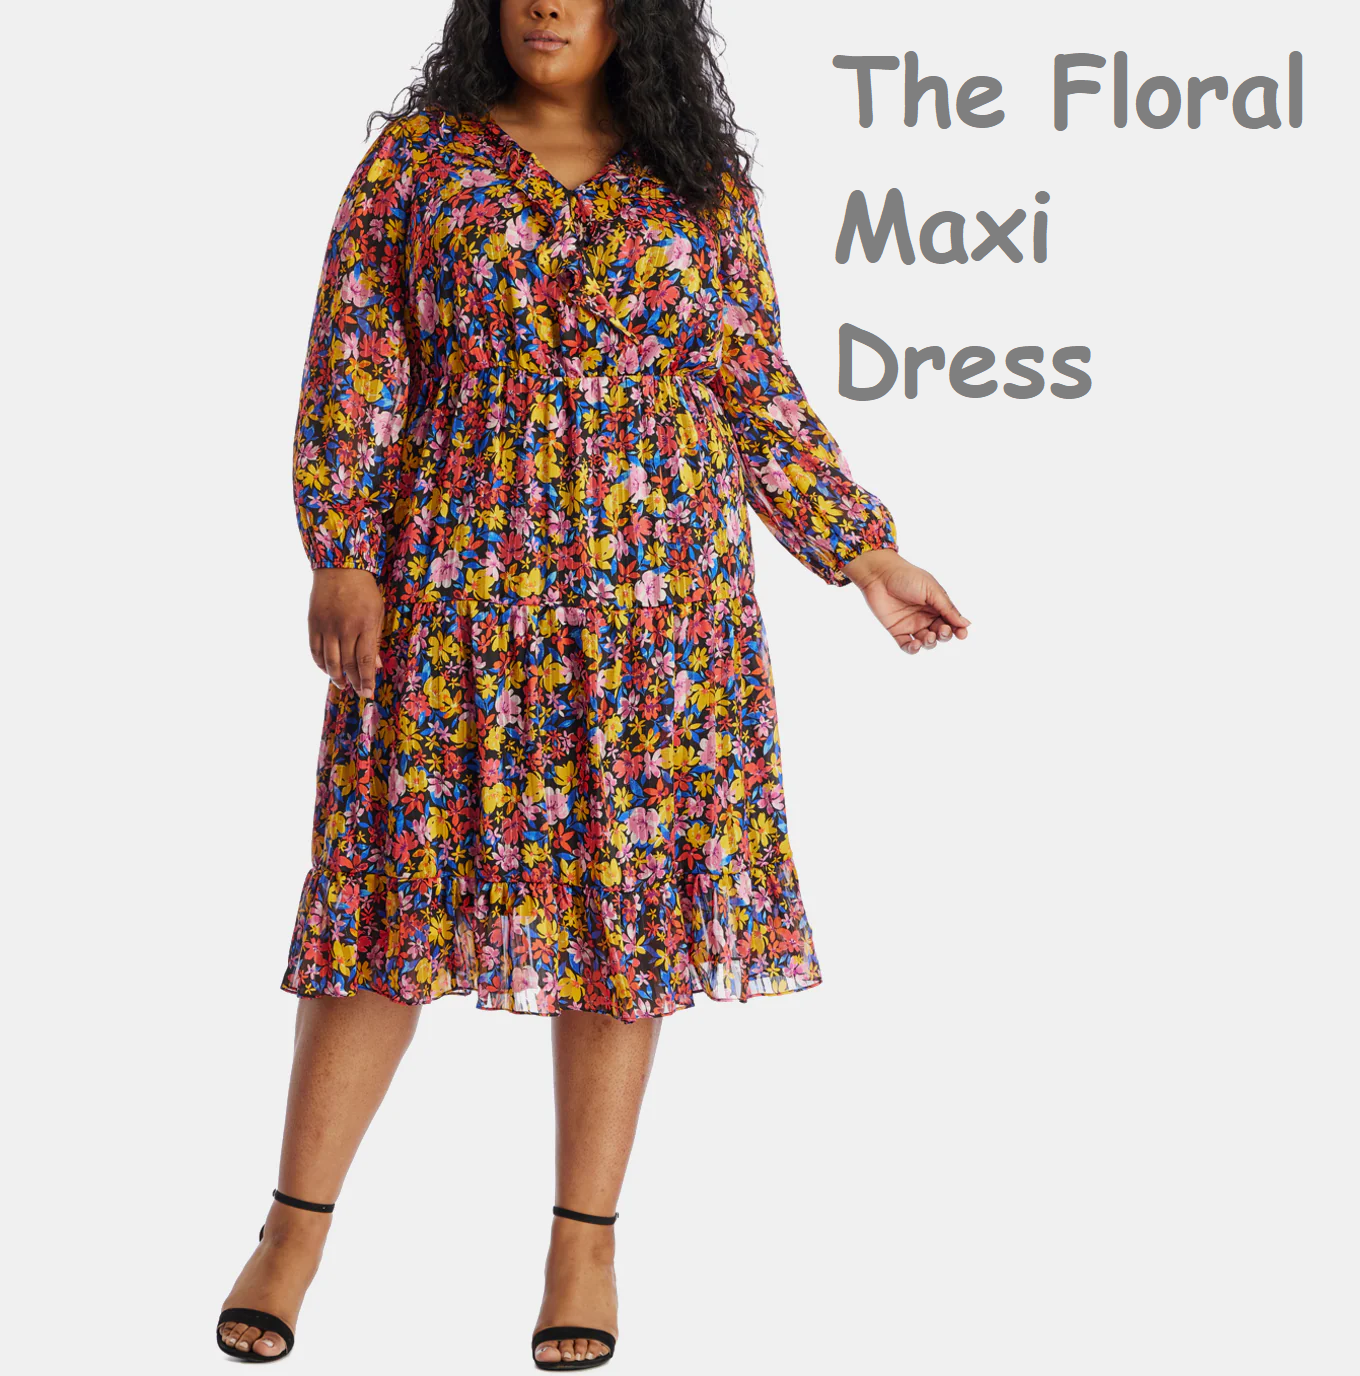 The floral maxi dress